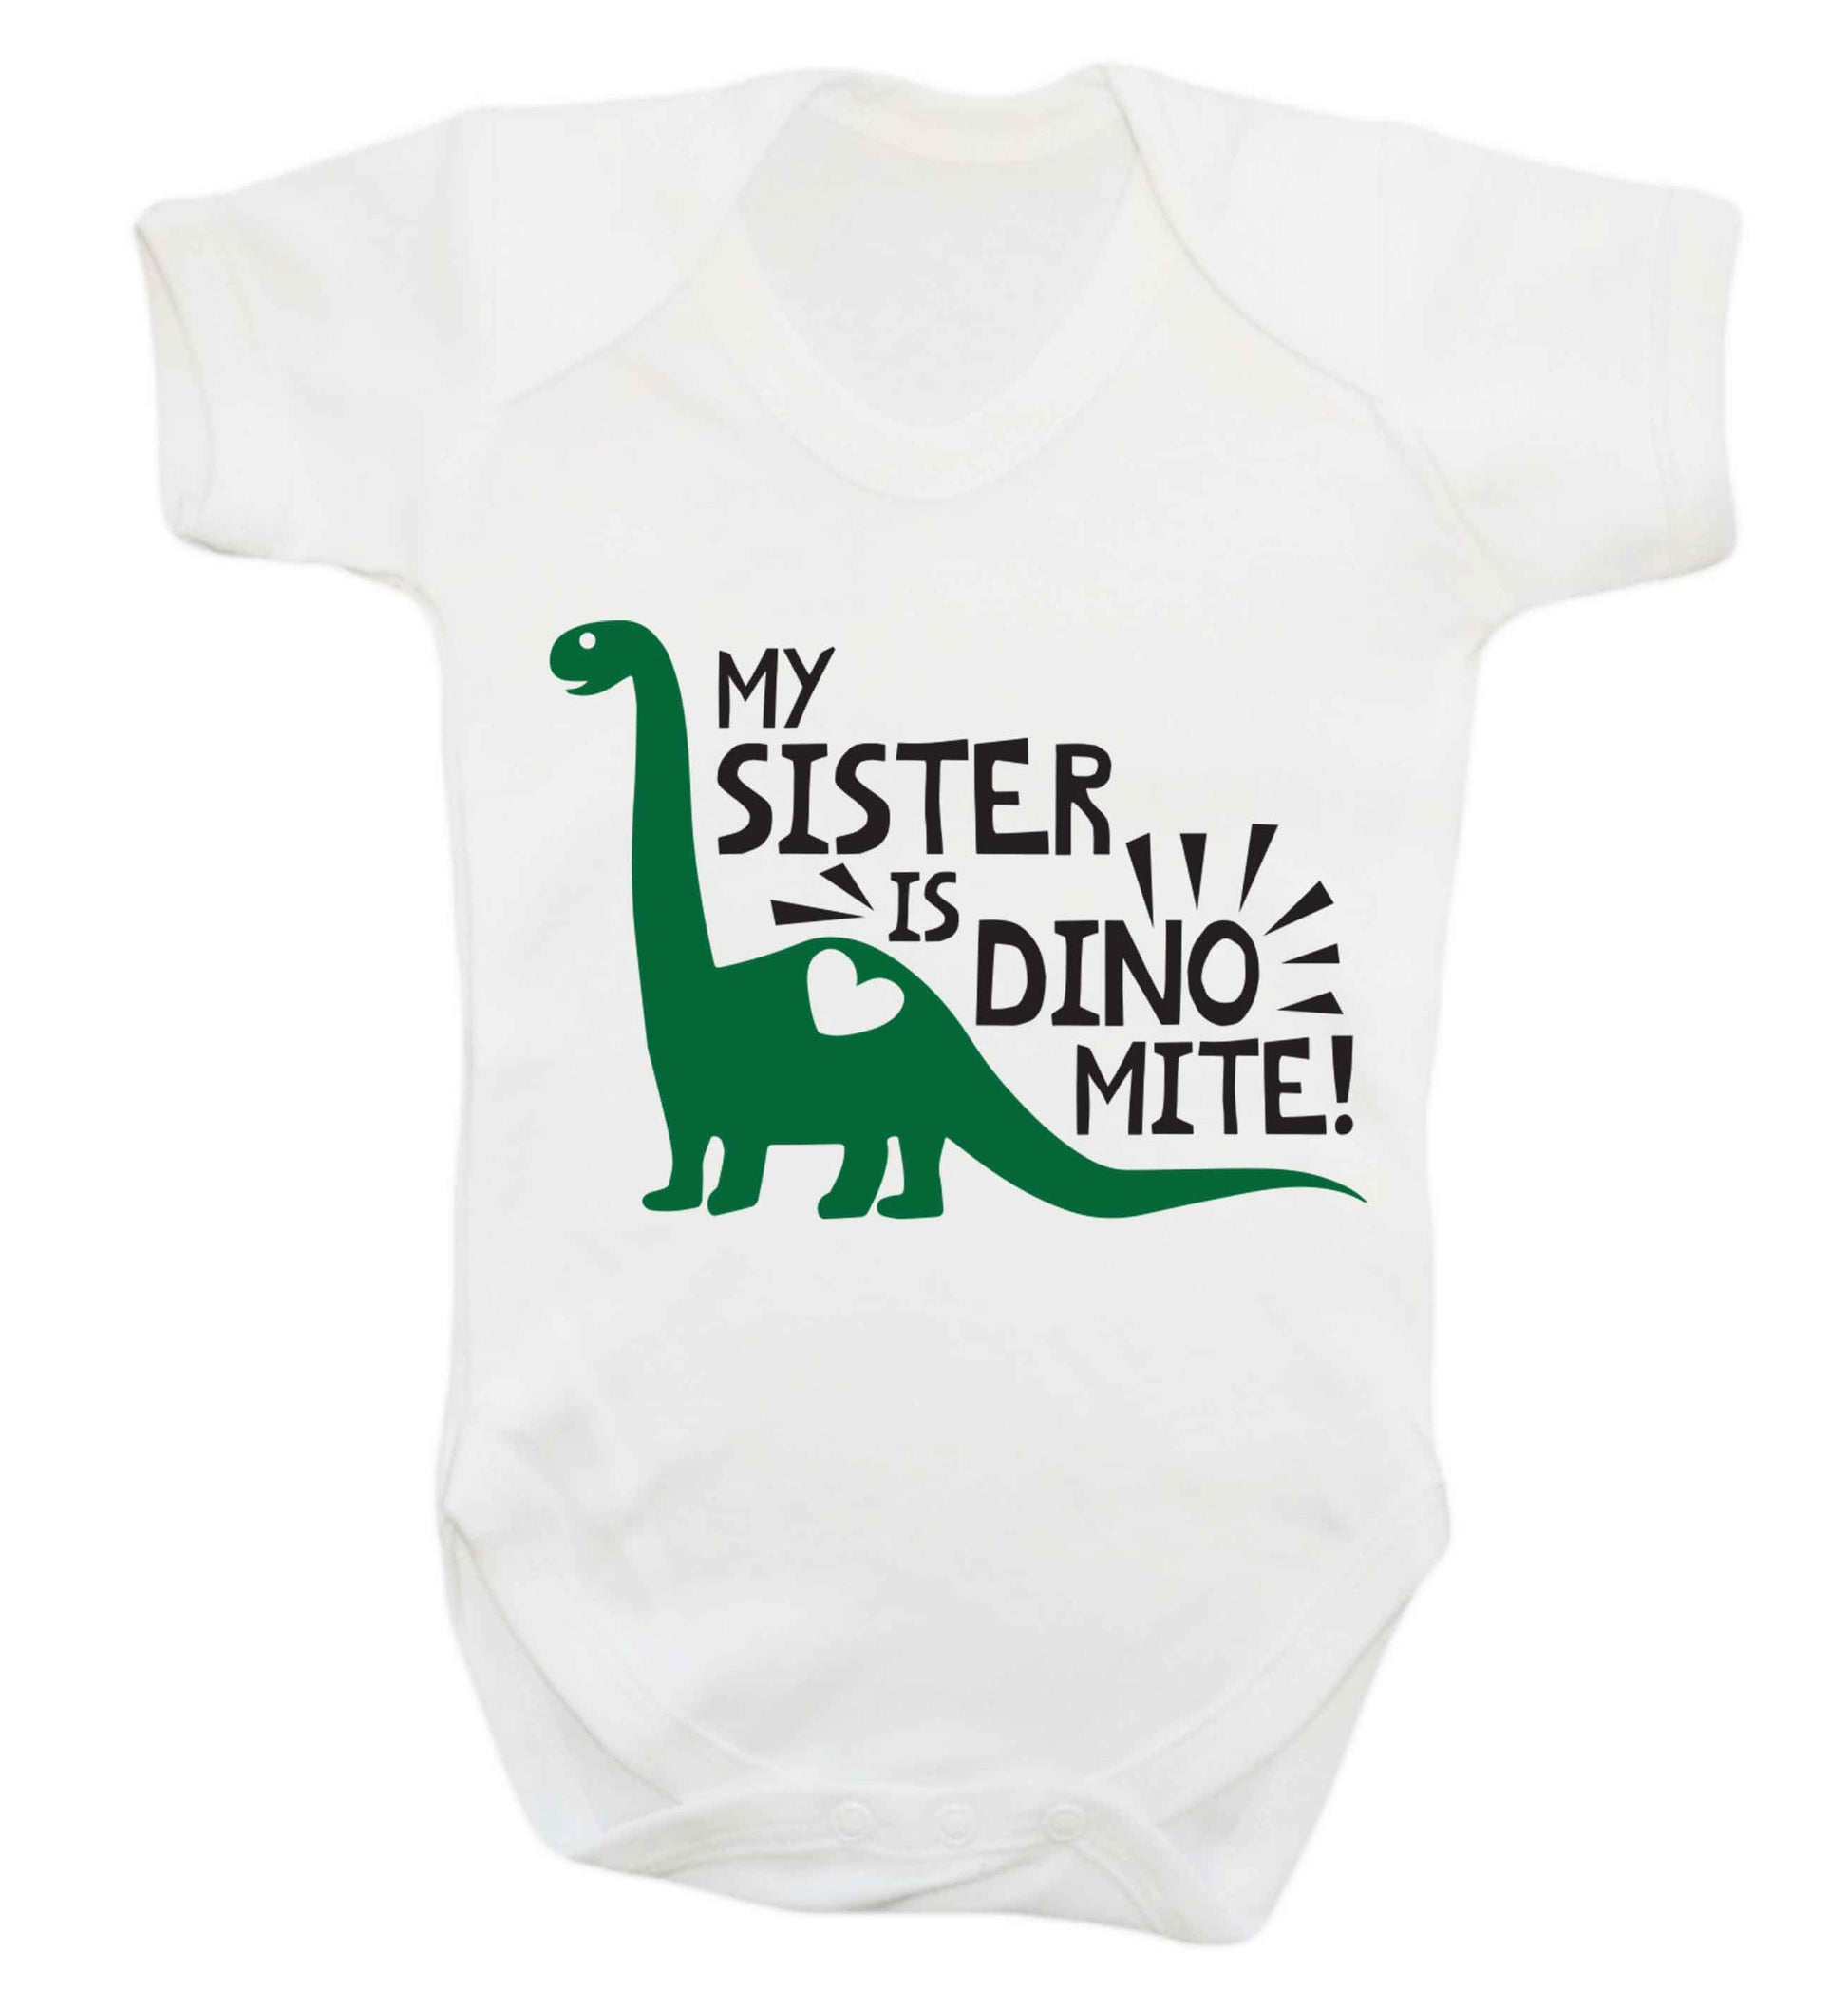 My sister is dinomite! Baby Vest white 18-24 months